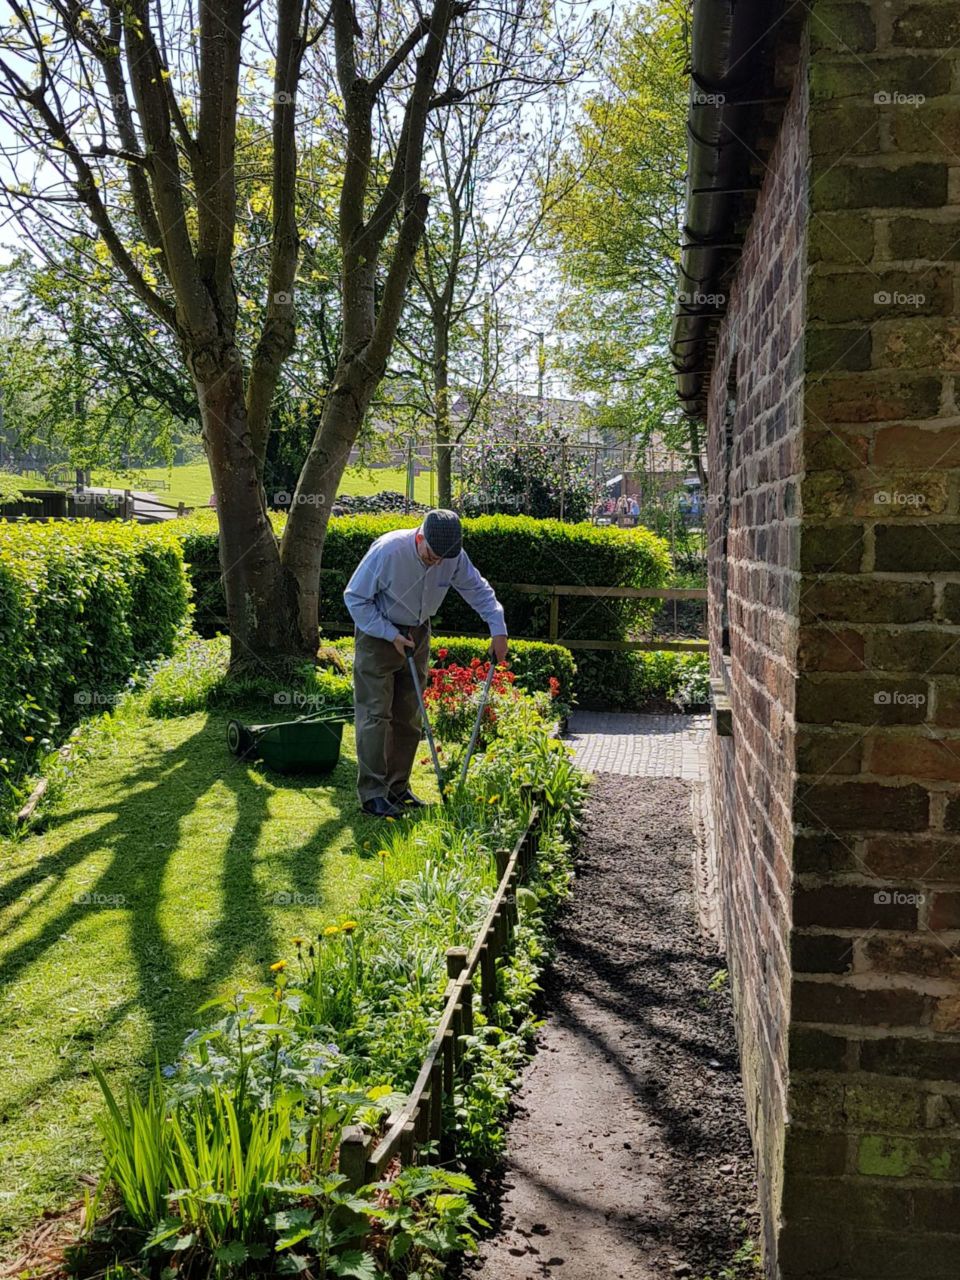 A Gardener hard at work